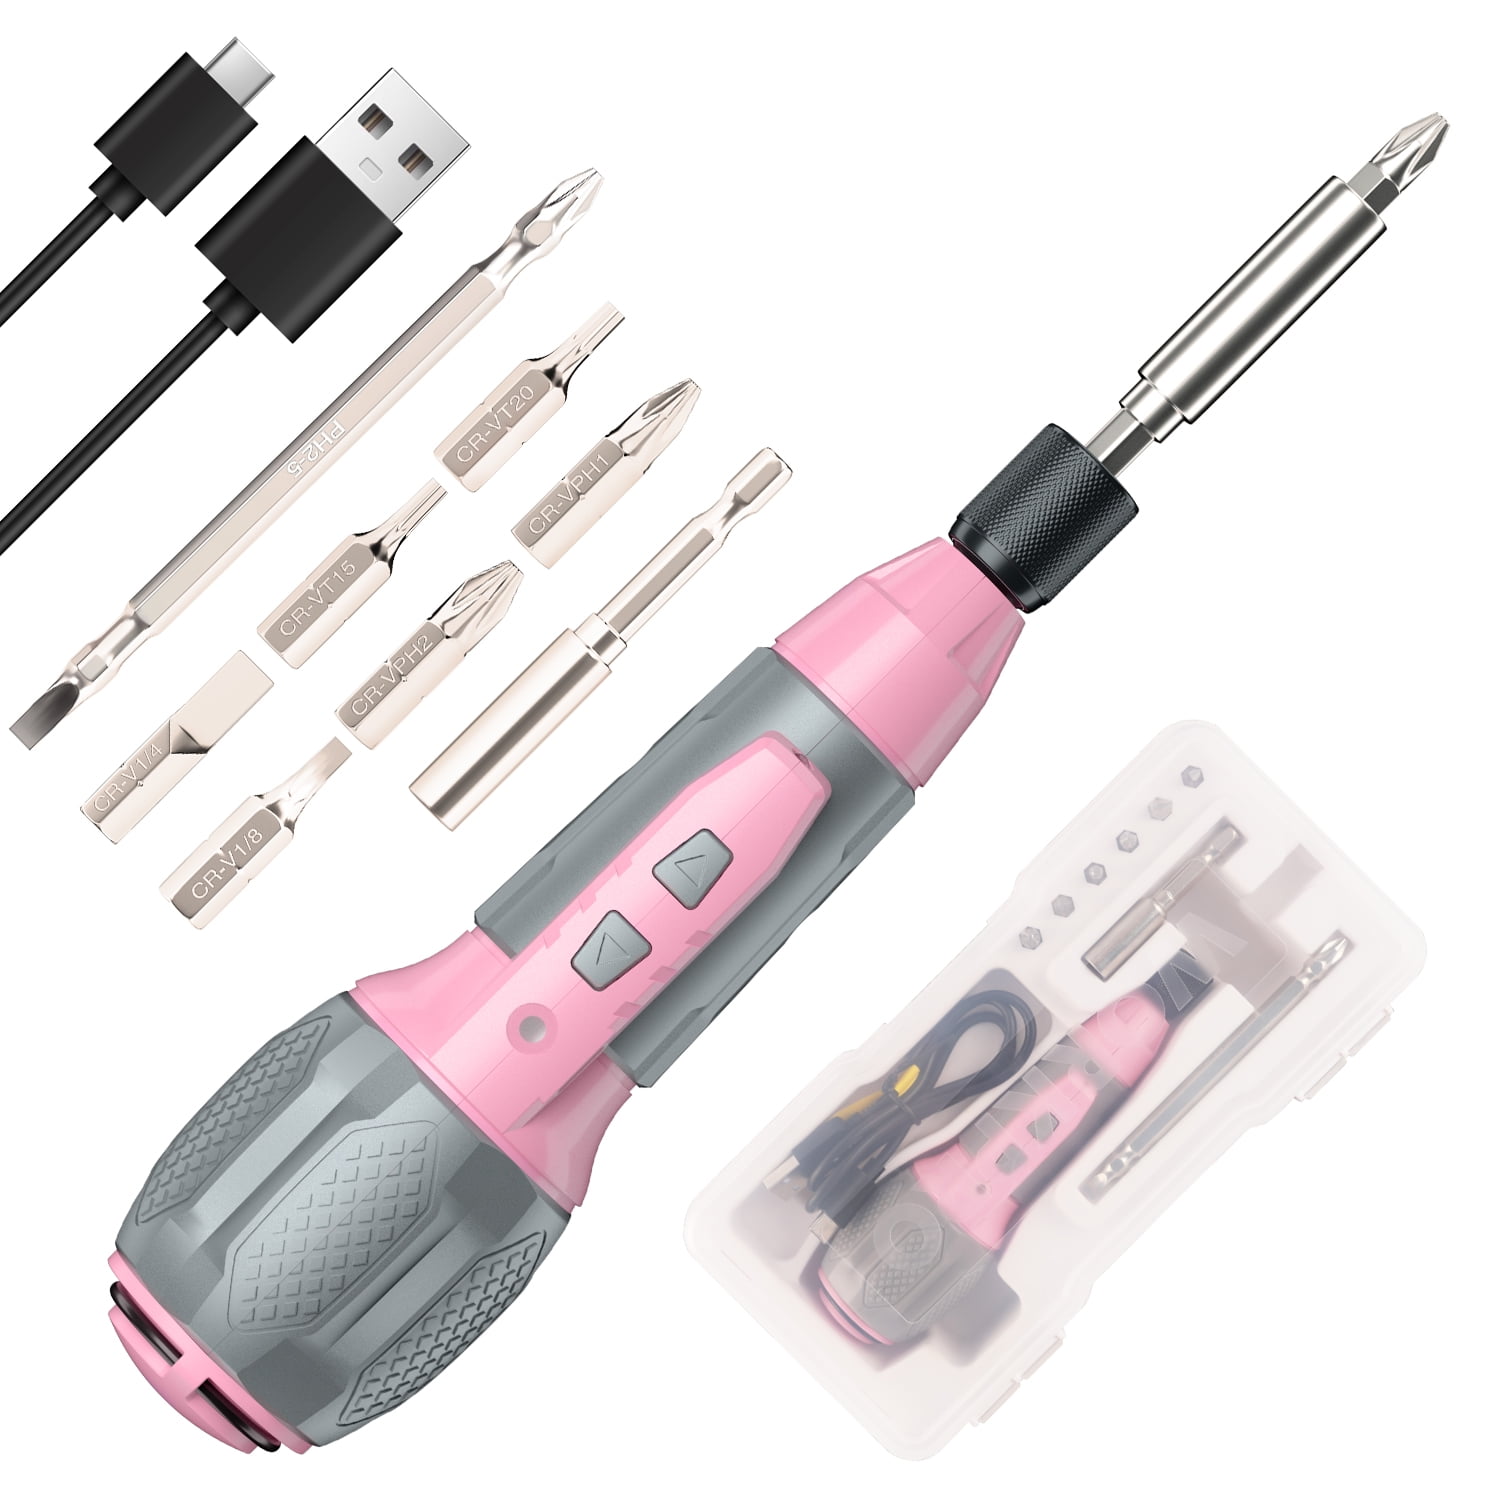 Electrical/cordless screwdriver or Manual screwdriver